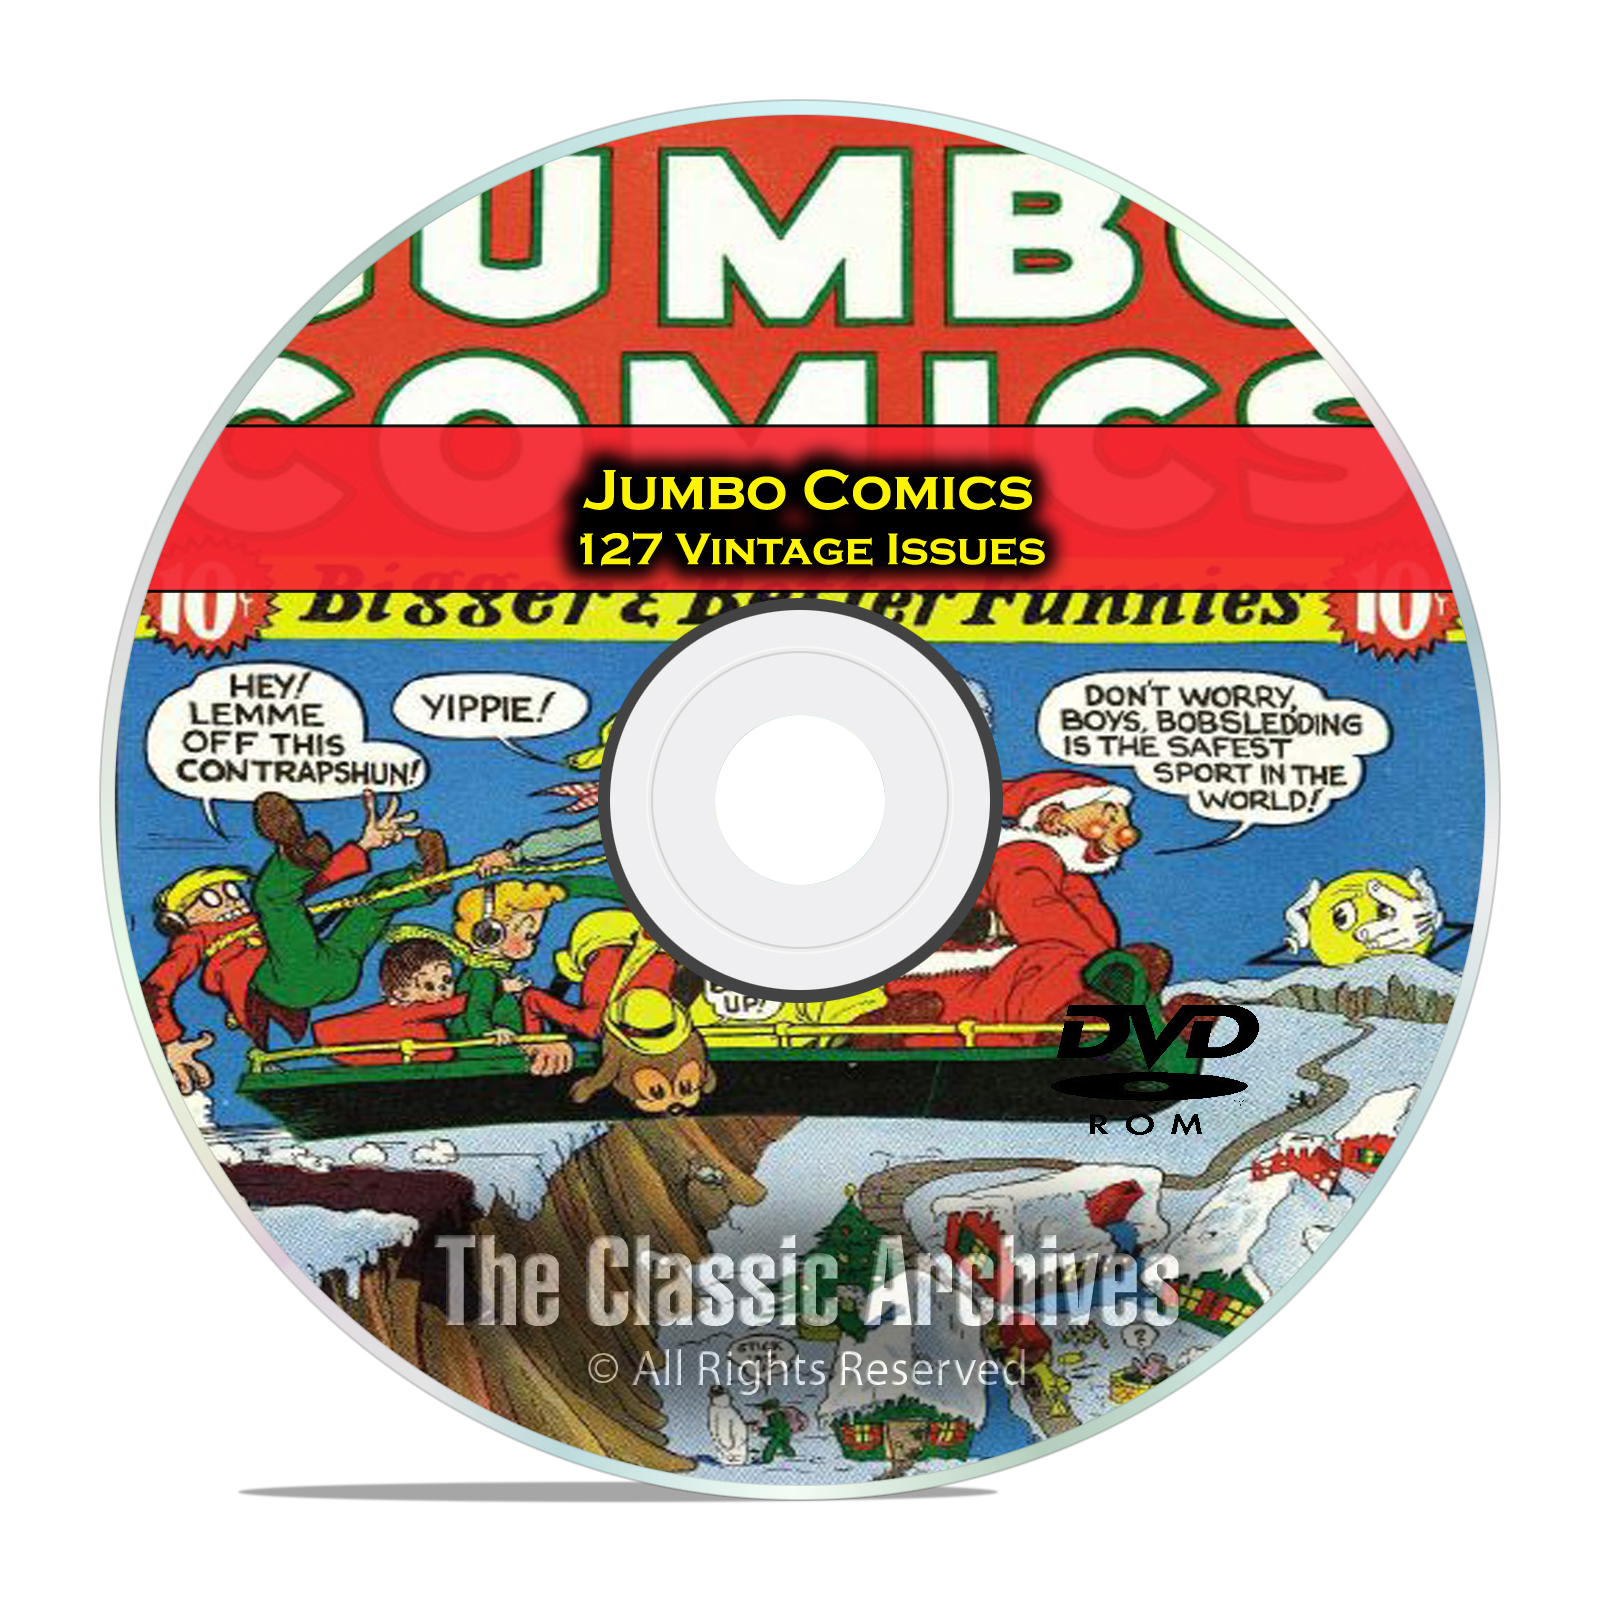 Jumbo Comics, Fiction House, 127 Issues, Vintage Golden Age Comics PDF DVD